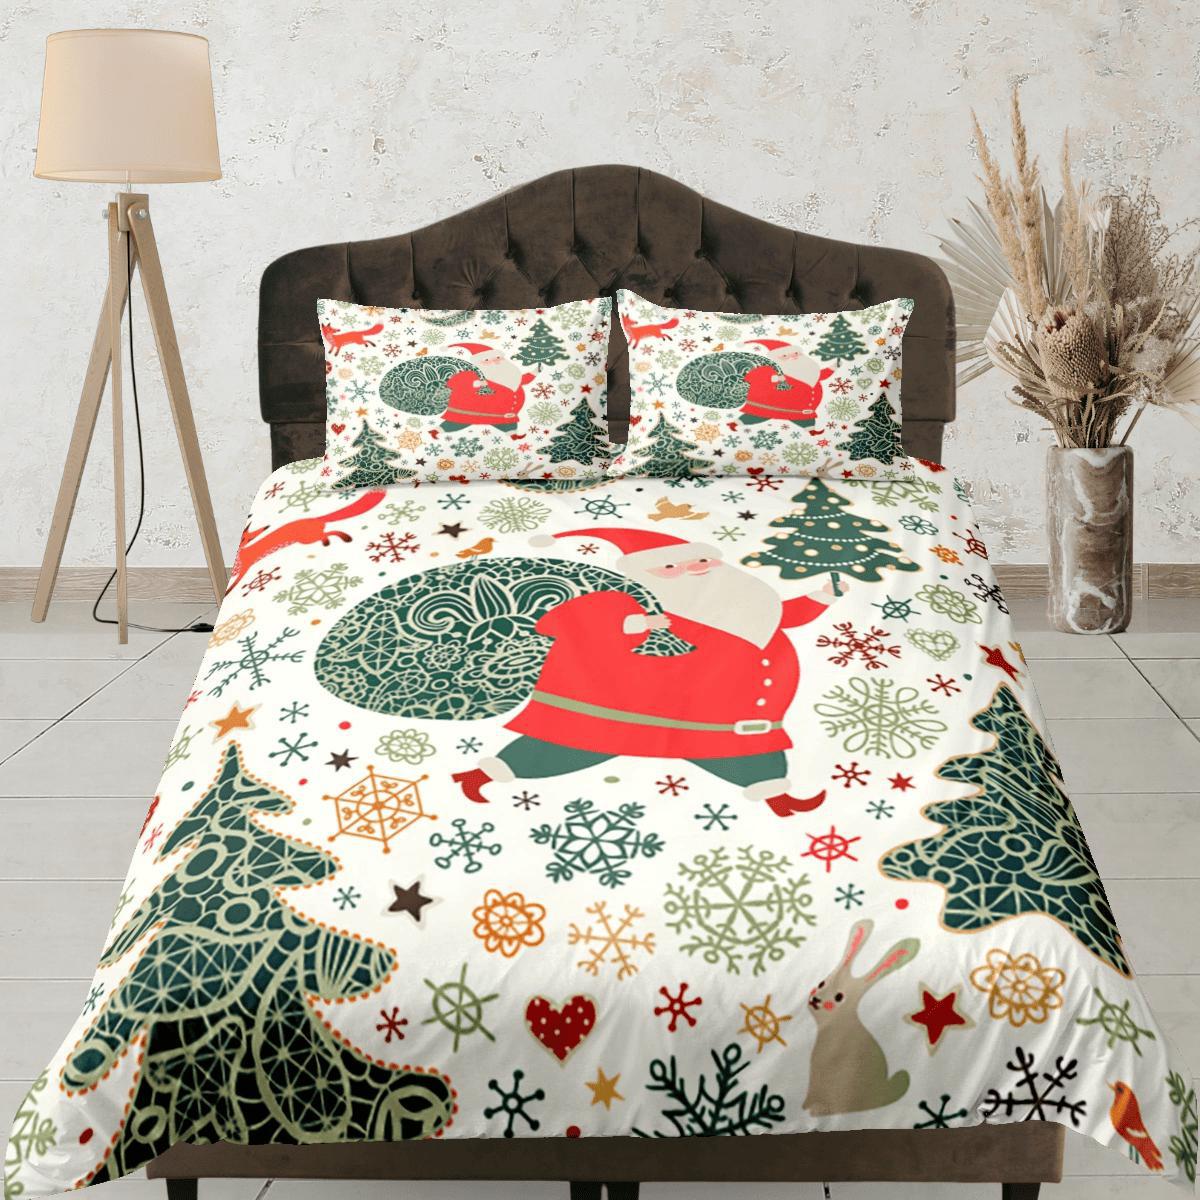 daintyduvet Christmas Duvet Cover Set with Pillows Christmas Tree Dorm Bedding Comforter Cover Christmas Gift